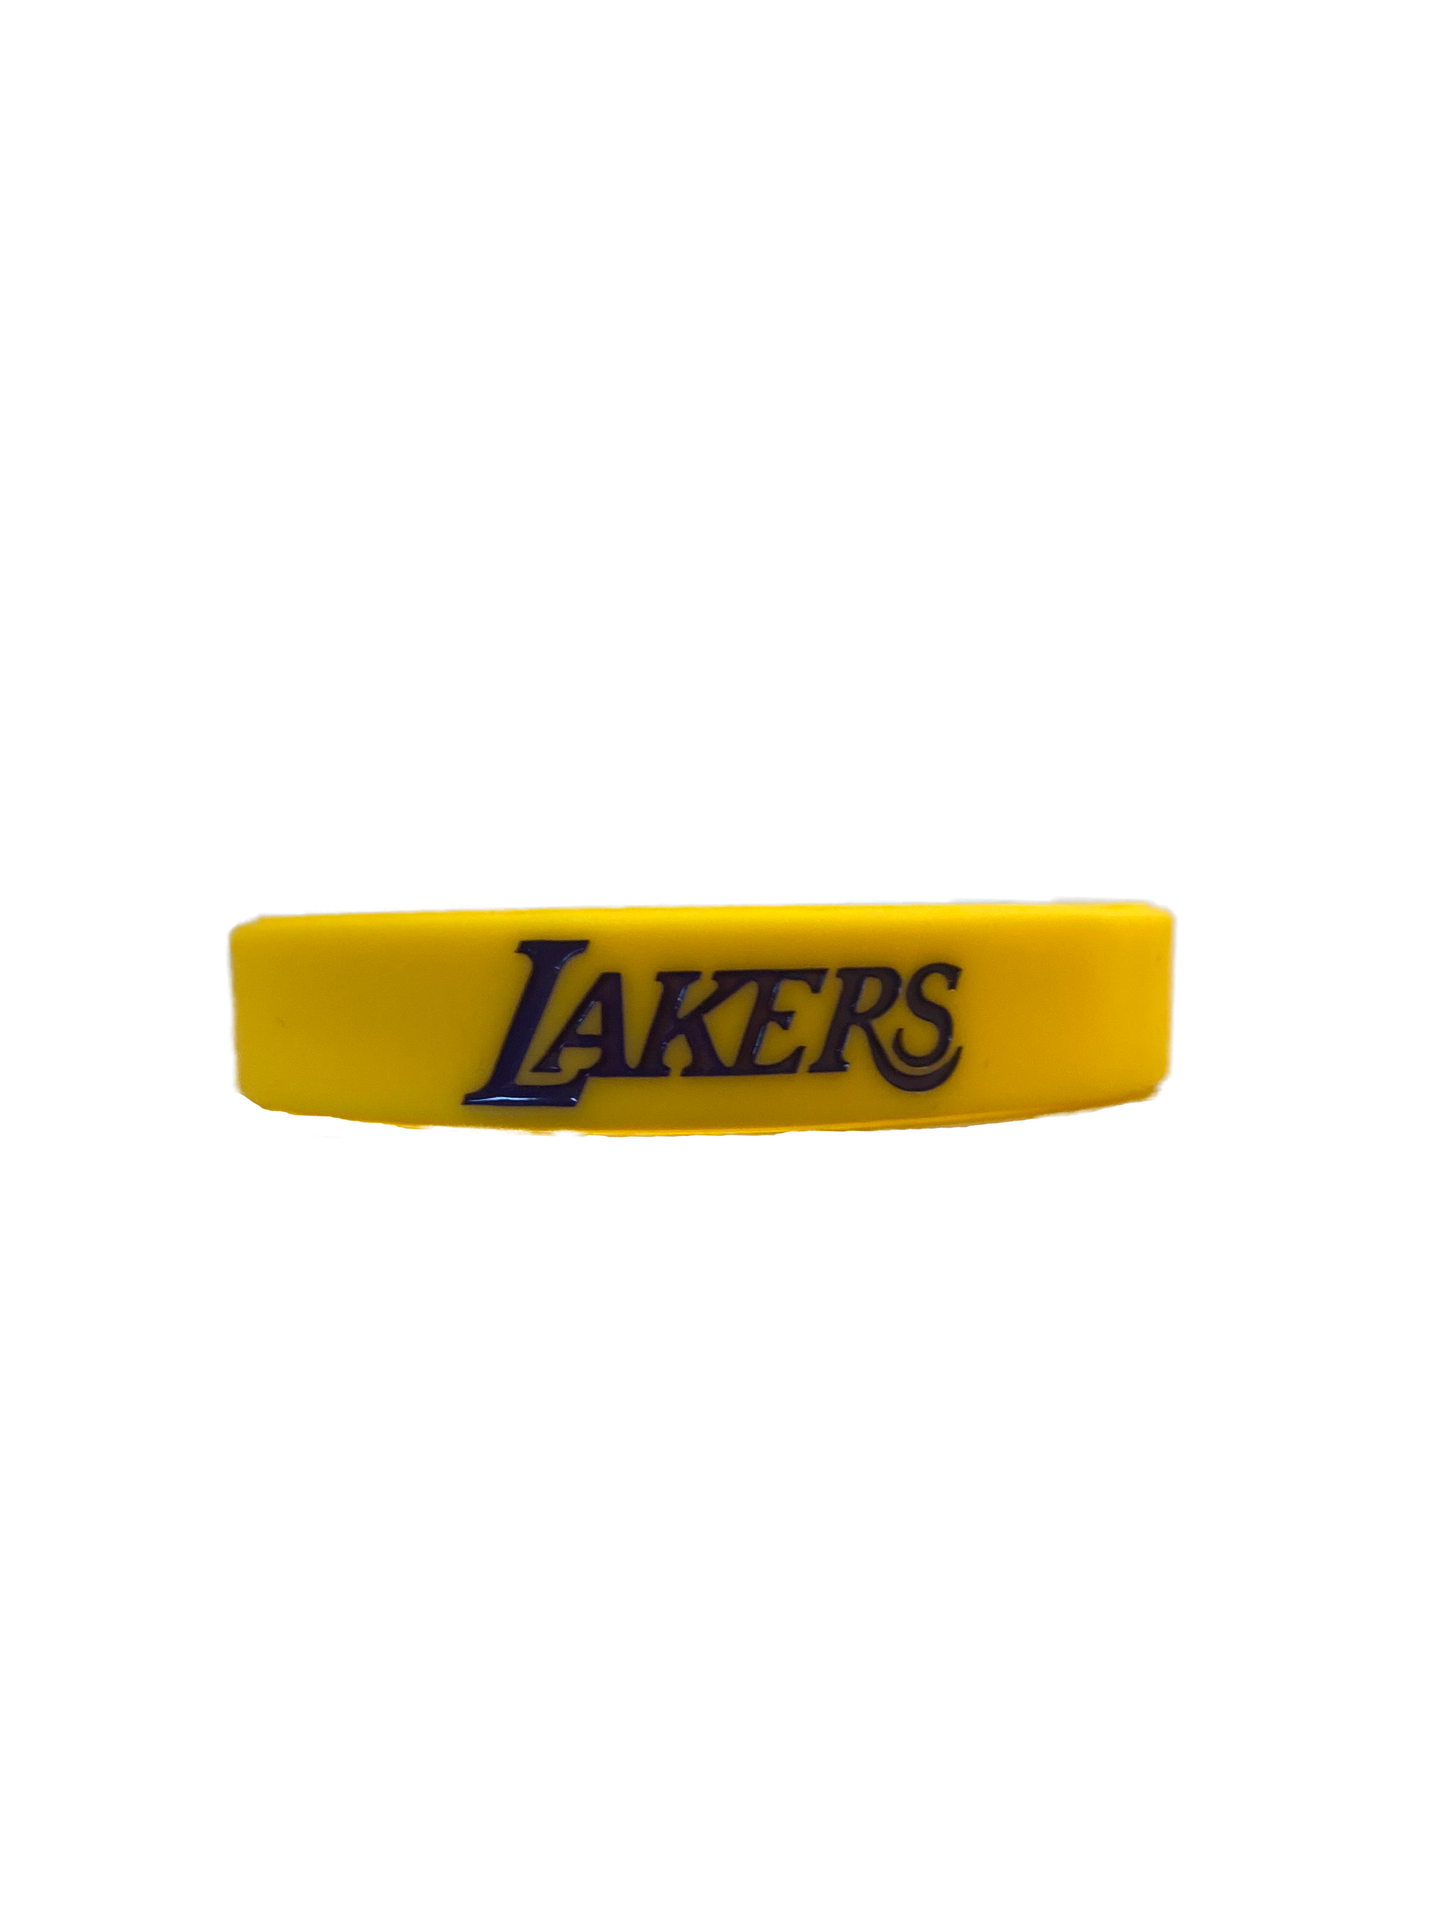 Kobe Bryant NBA Silicone Wristband